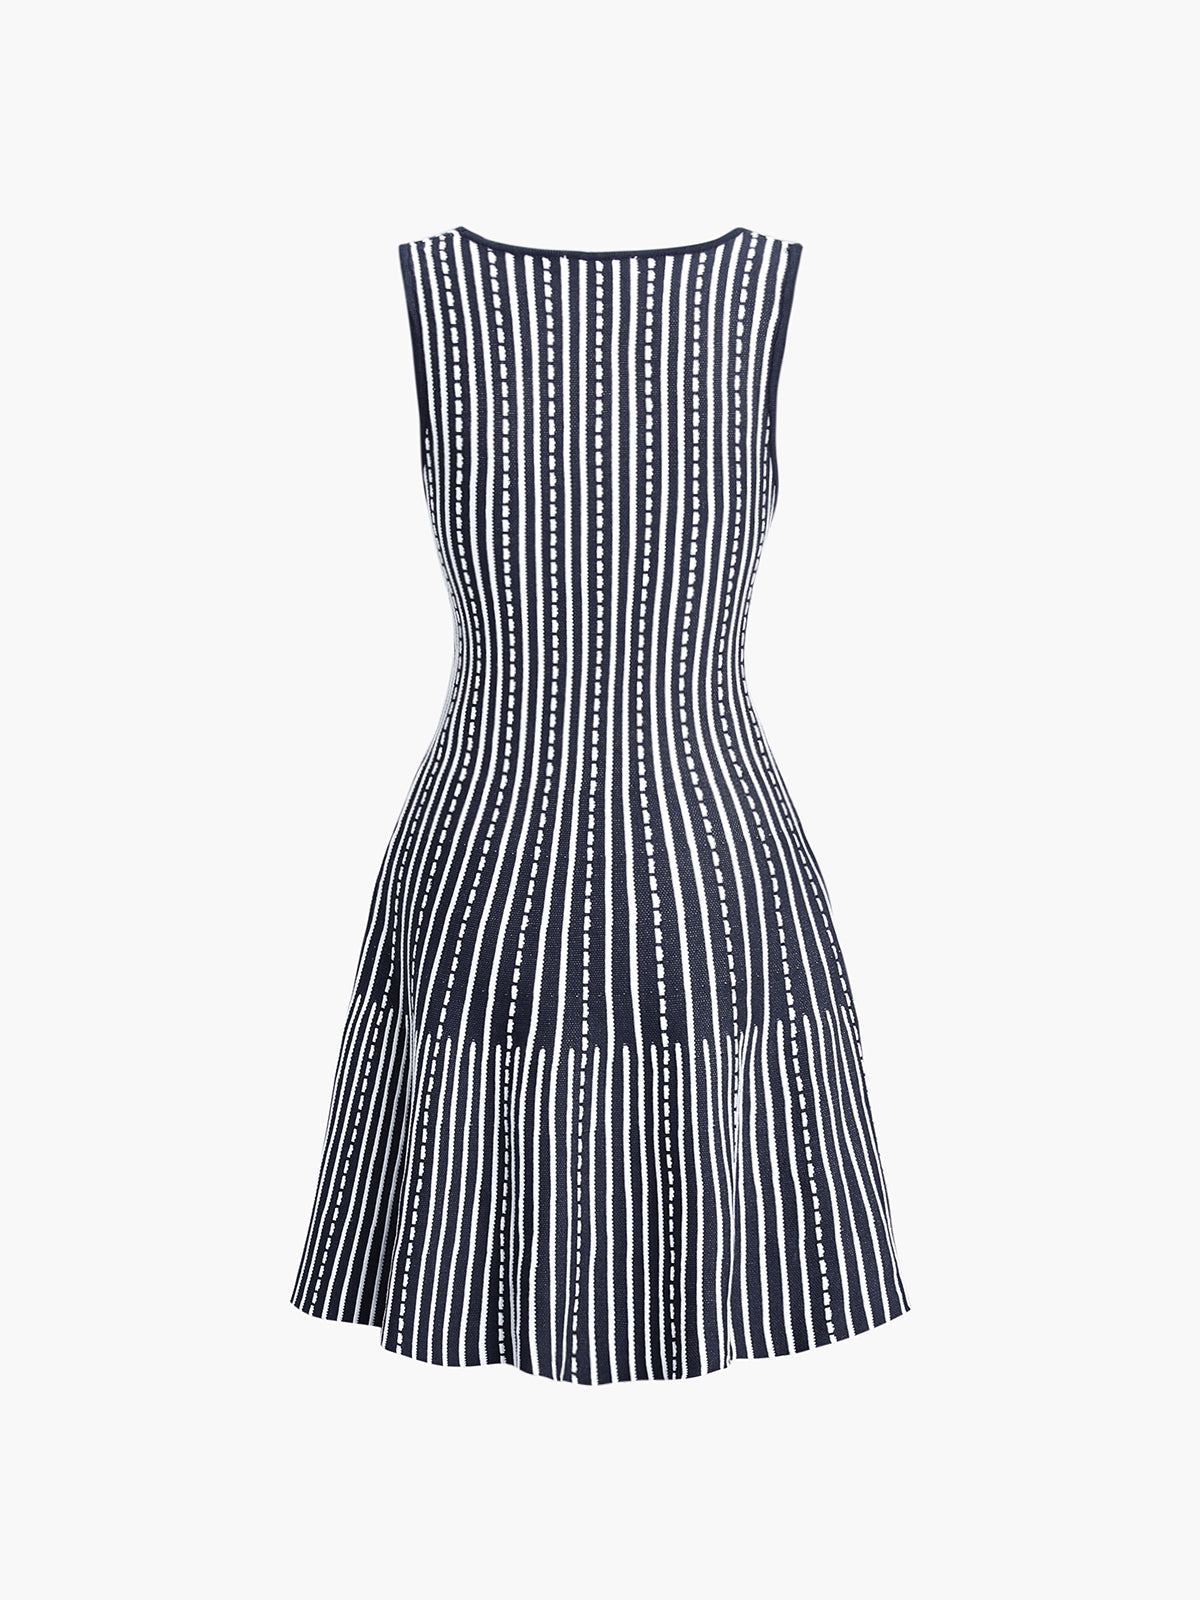 Zebra Print Knit Short Dress